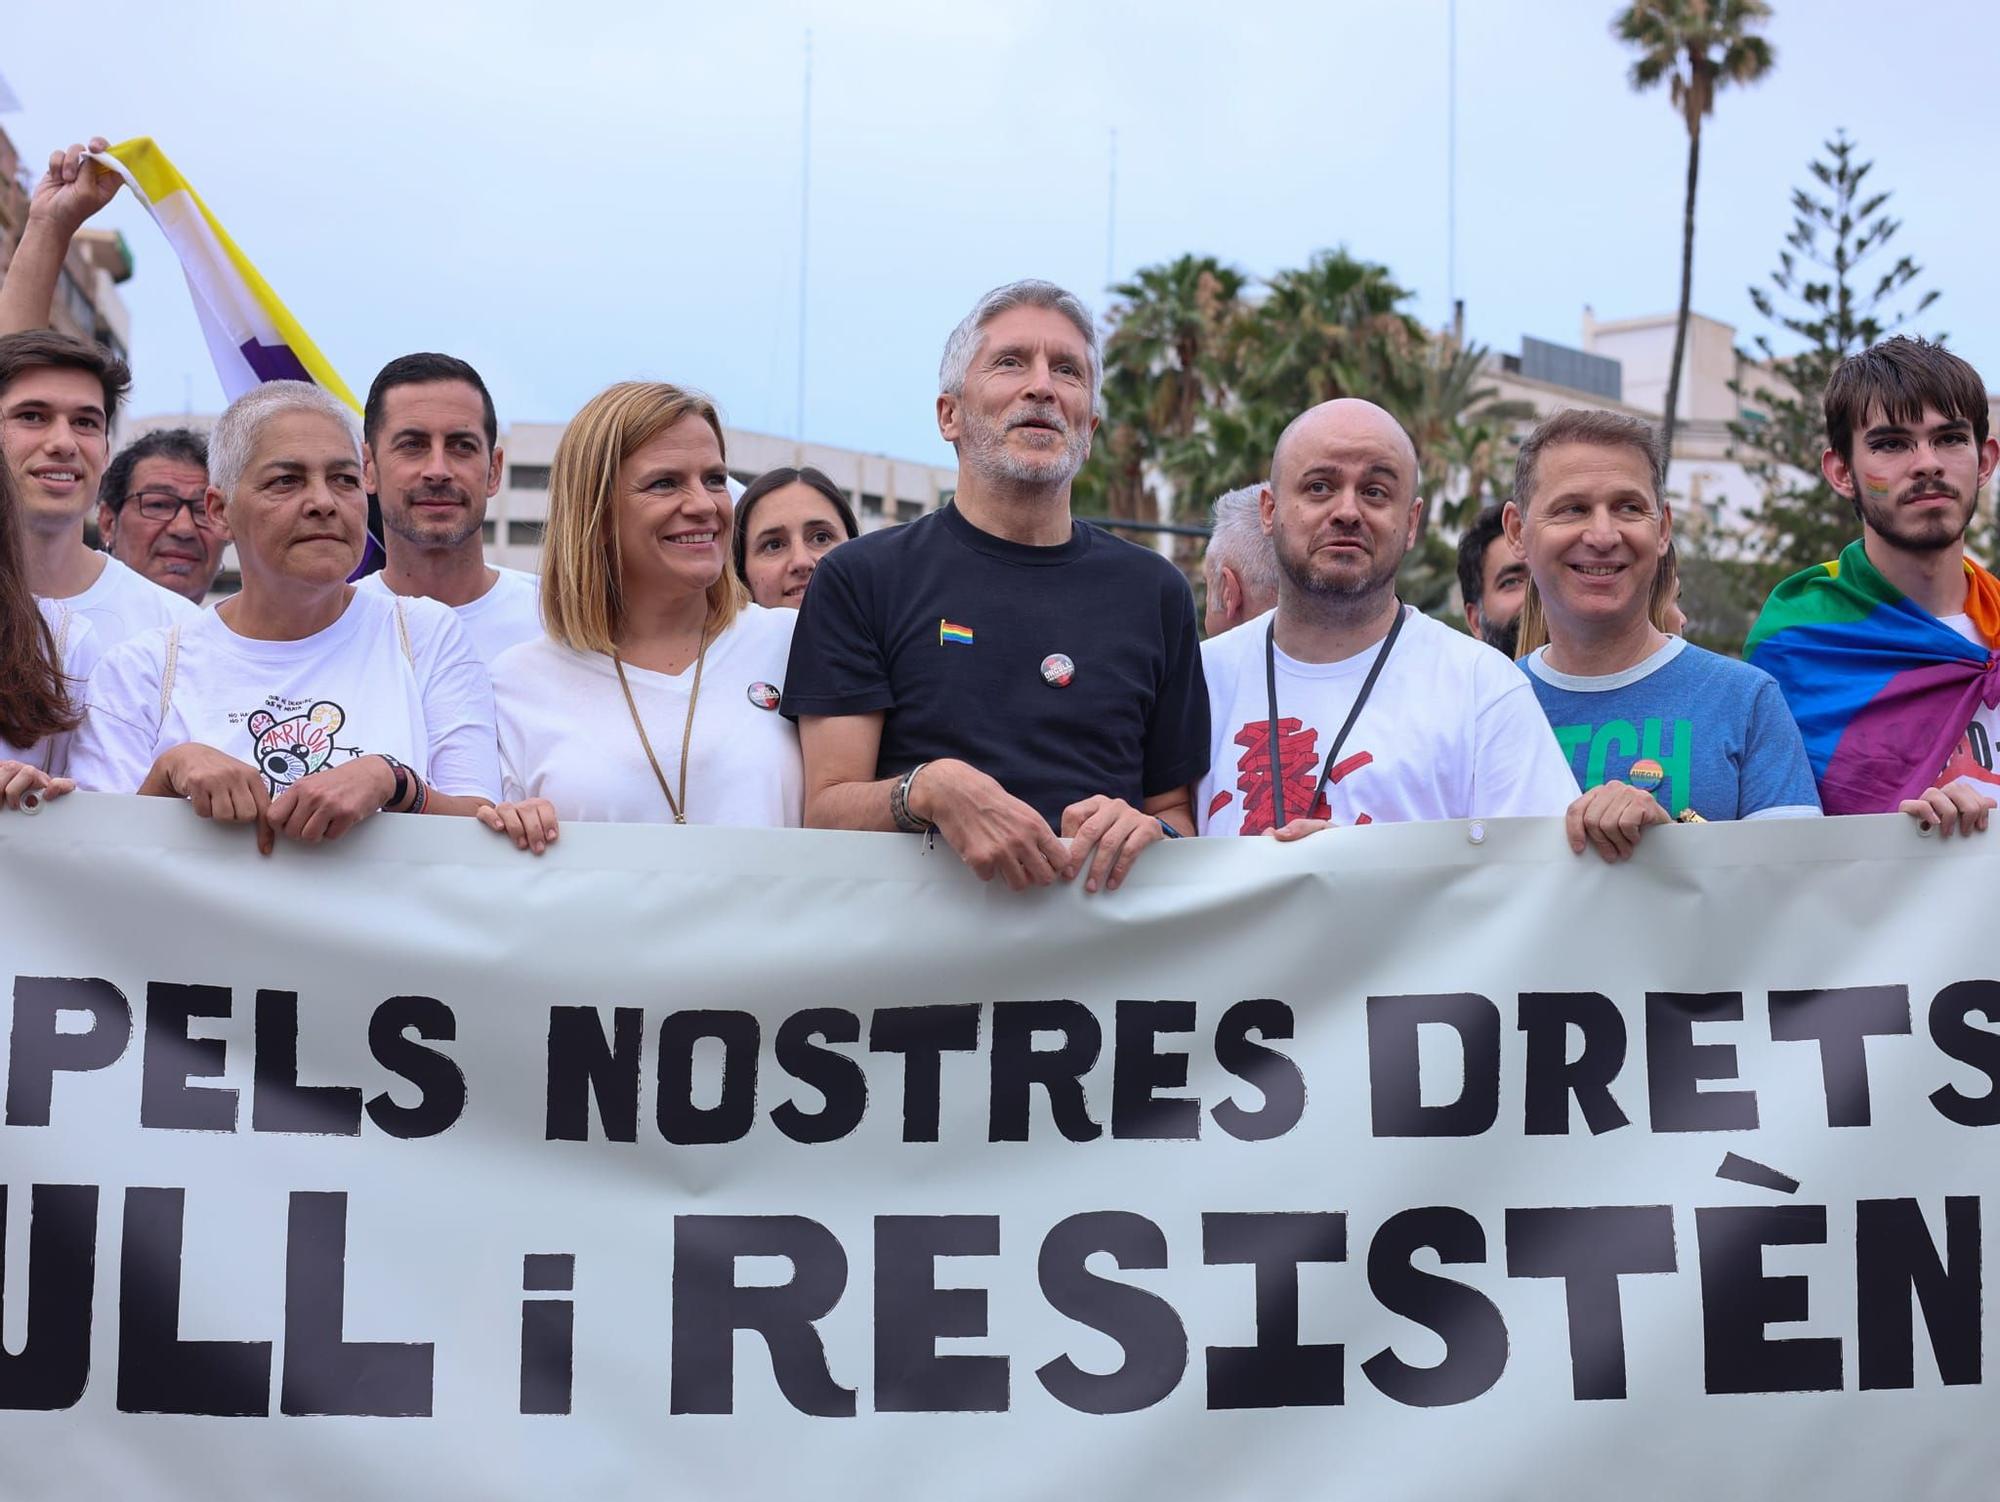 La marcha del Orgullo en València